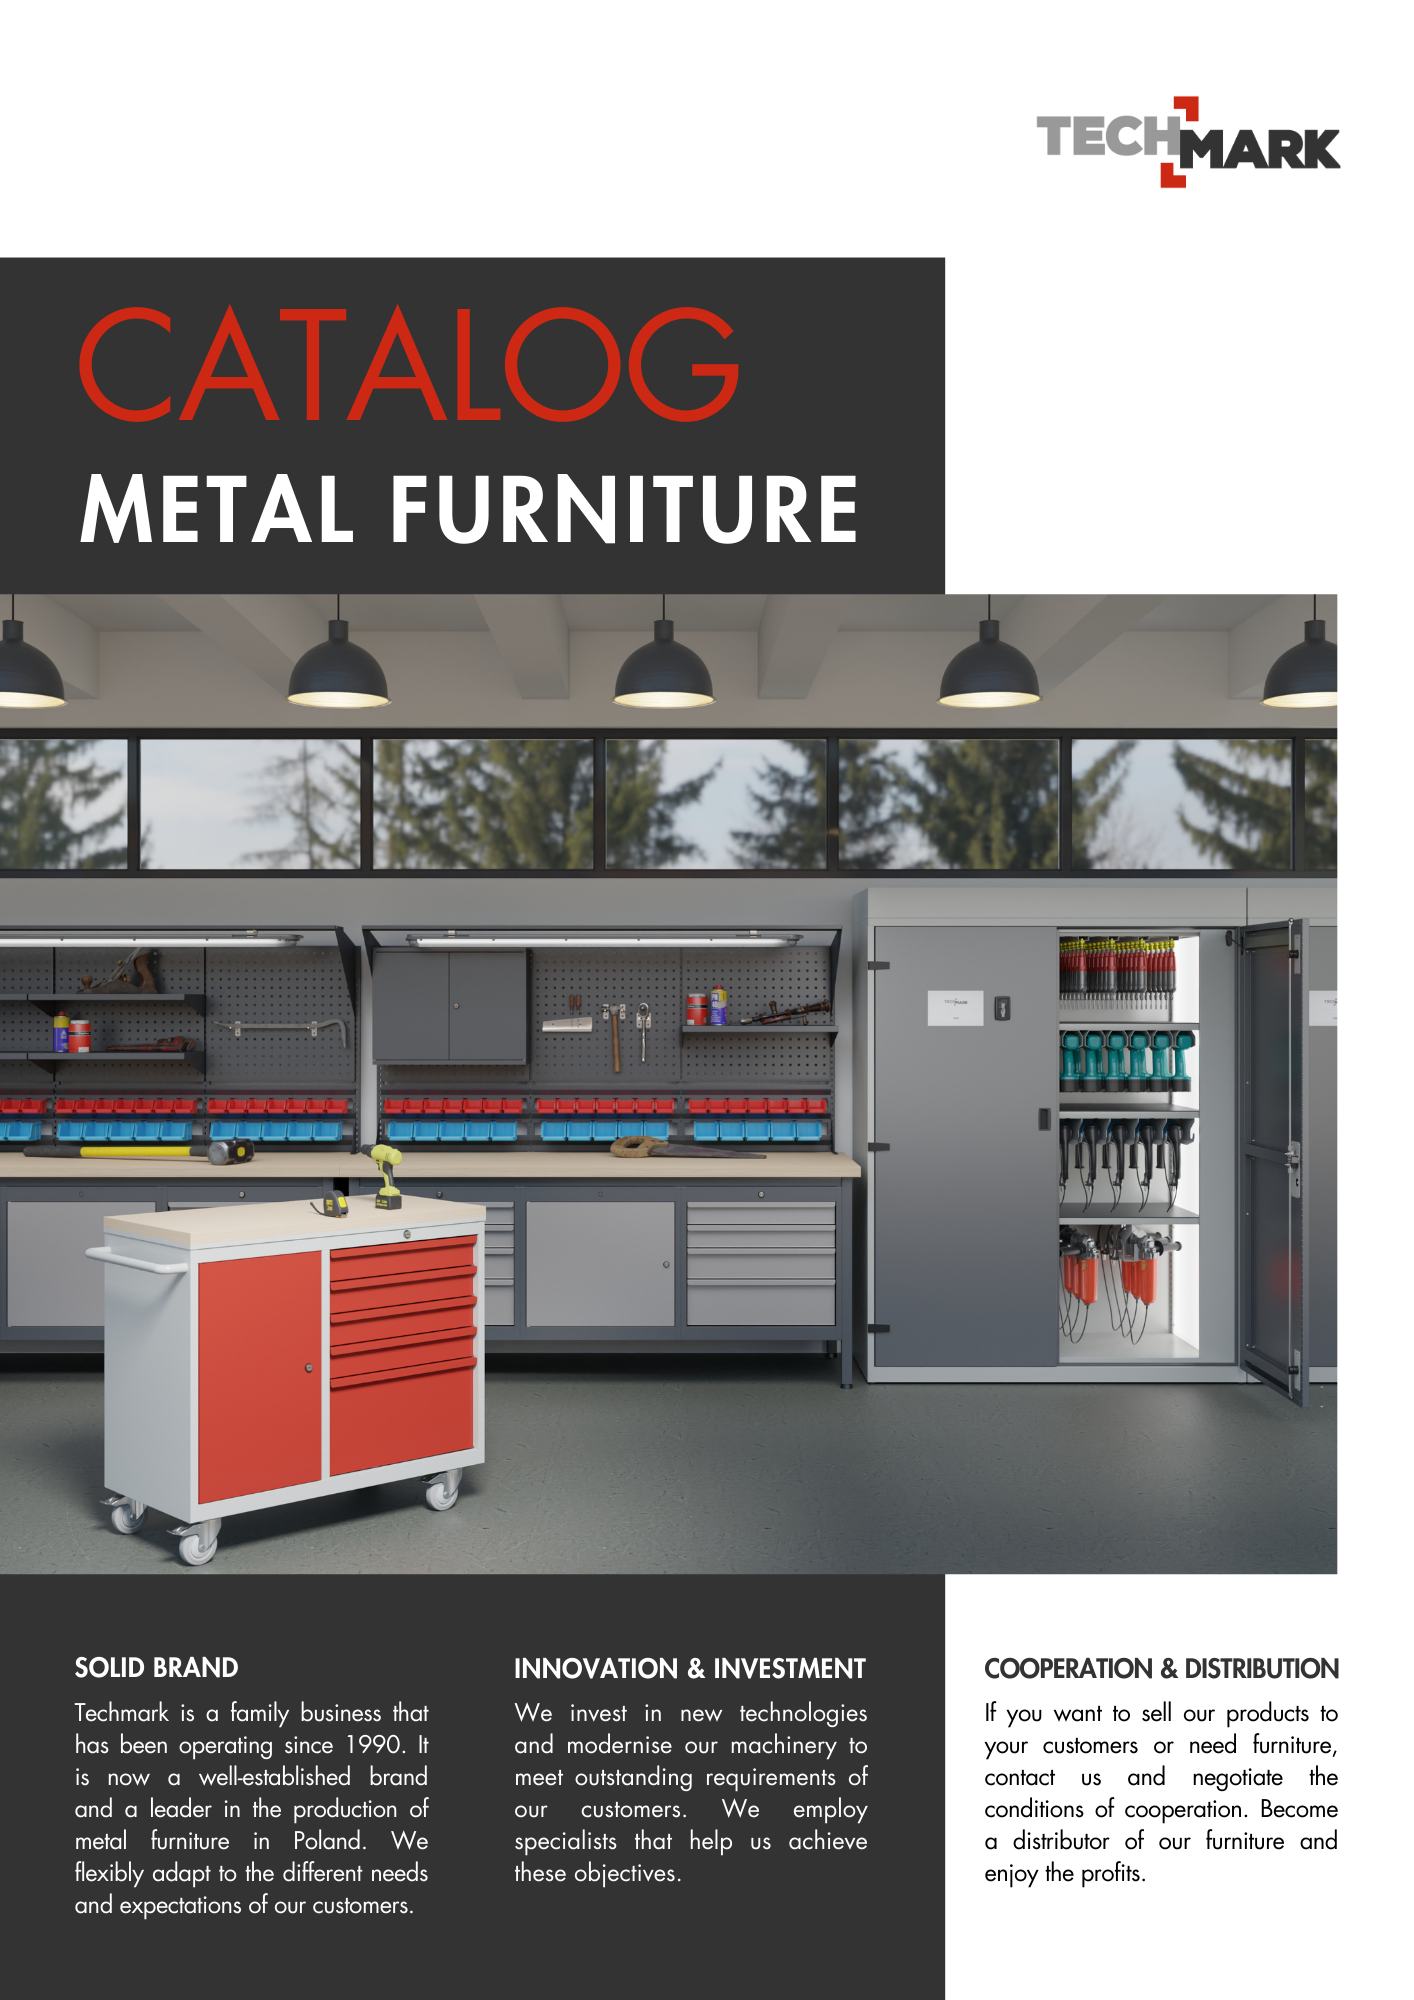 Techmark metal furniture catalog